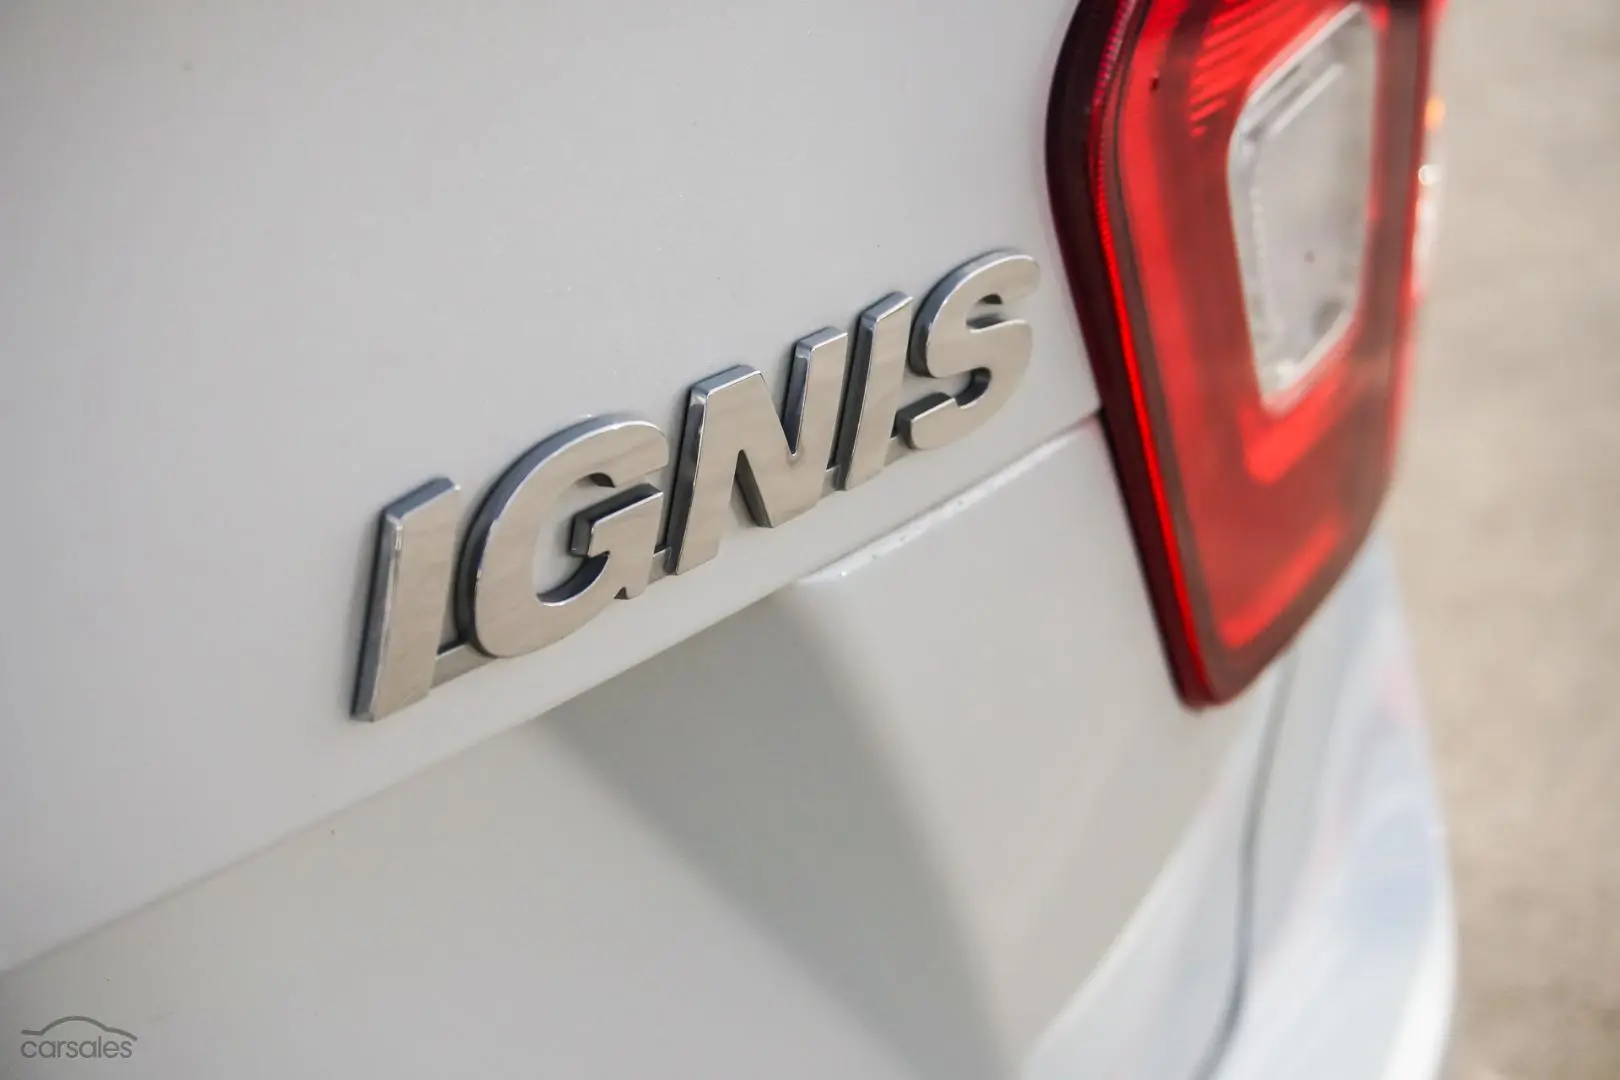 2016 Suzuki Ignis Image 13